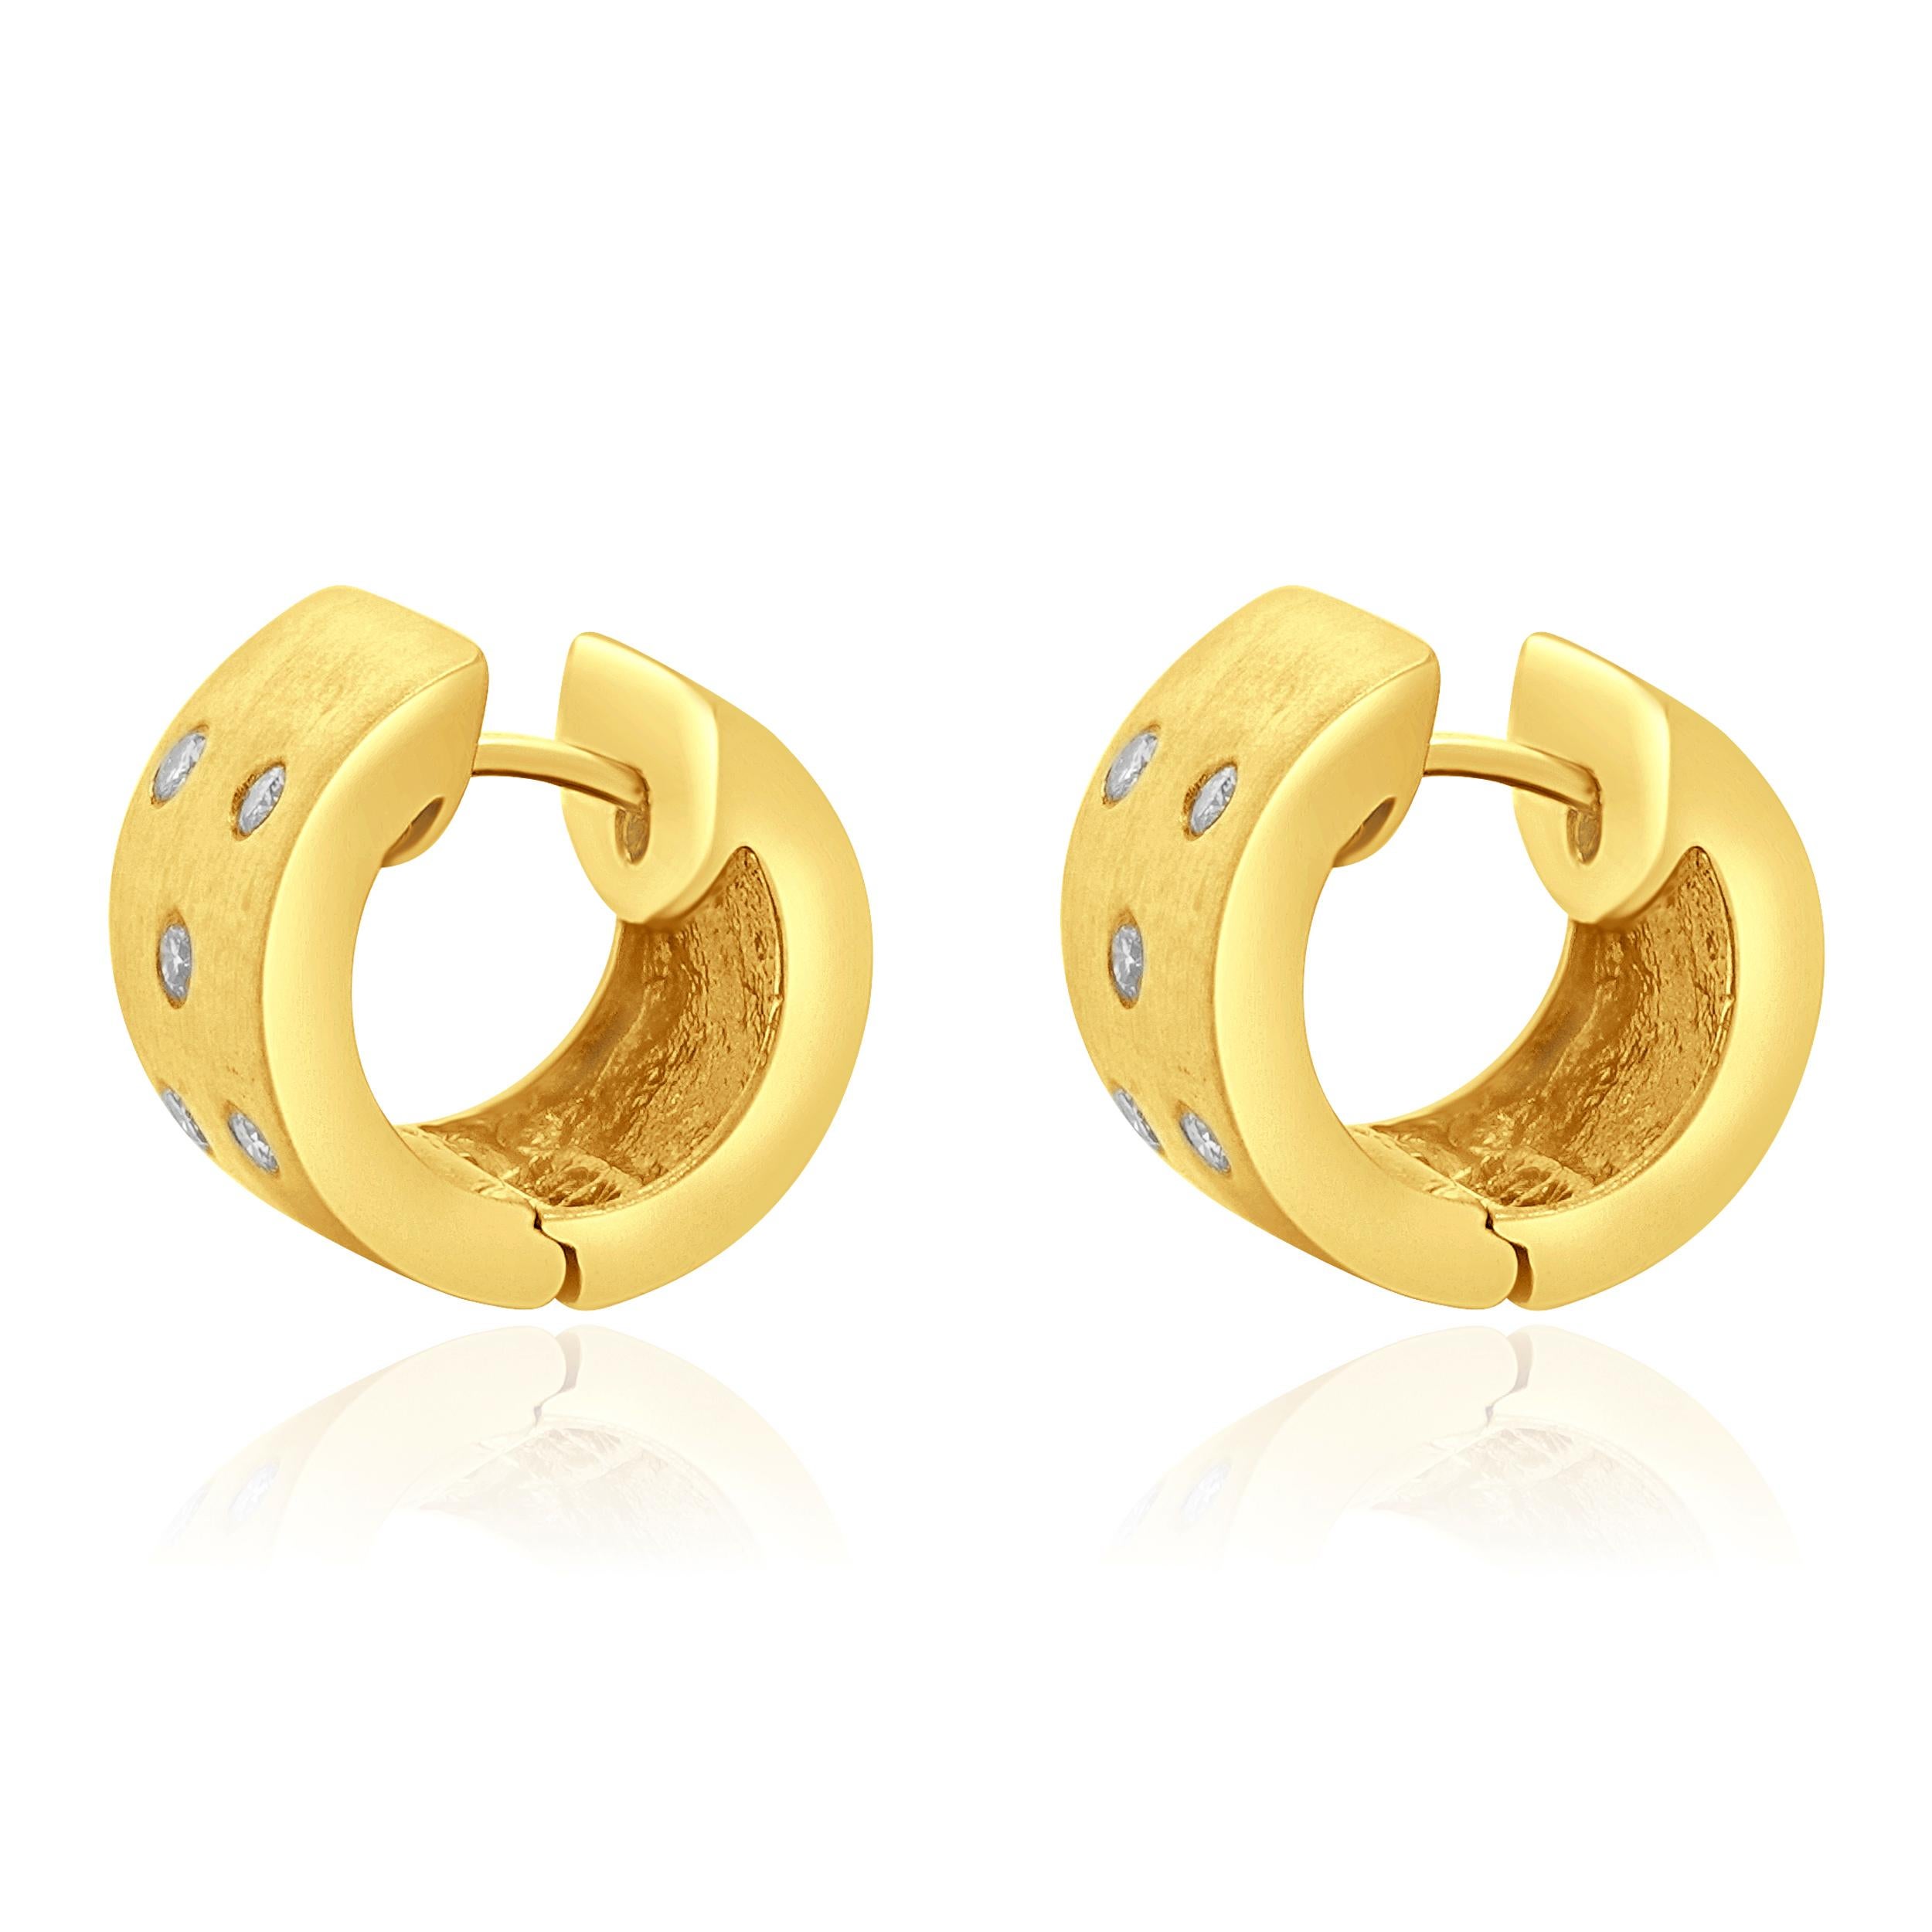 Designer: custom design
Material: 14K yellow gold
Diamonds: 10 round brilliant cut =0.15cttw
Color: H 
Clarity: SI1-2
Dimensions: earrings measure 8.60mm 
Weight: 8.63 grams
